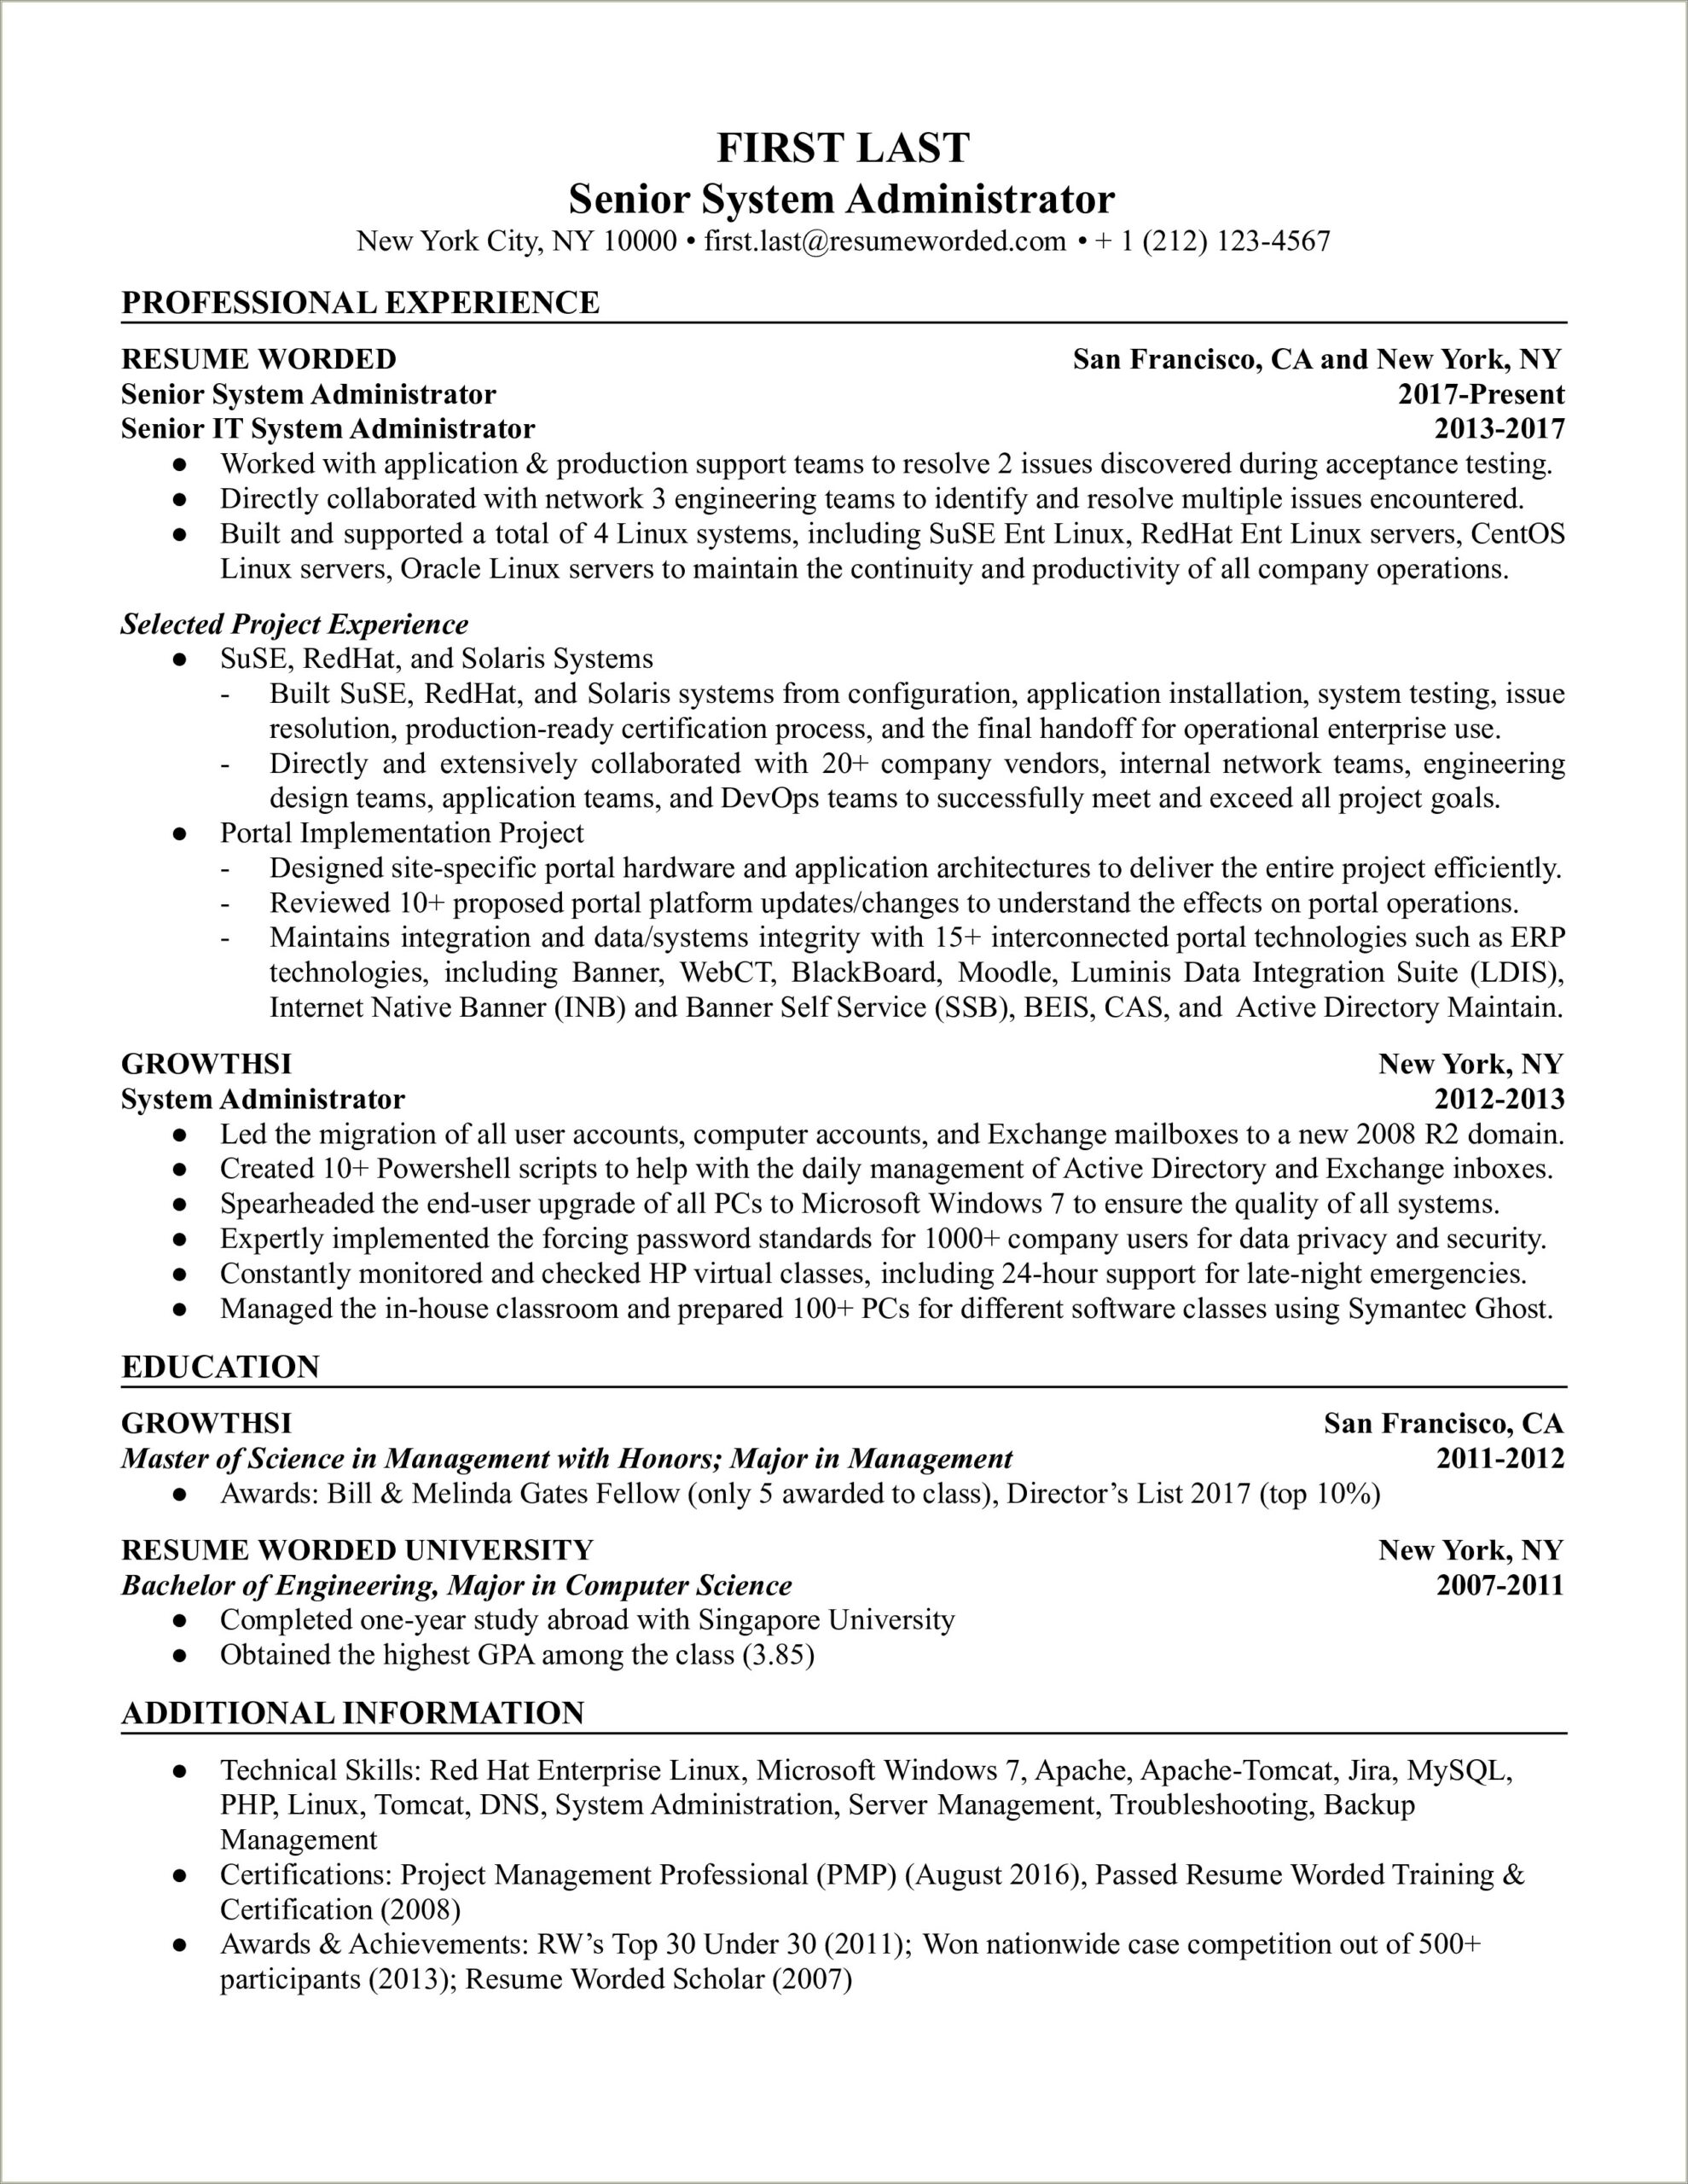 Job Descriptions On Resume For Server